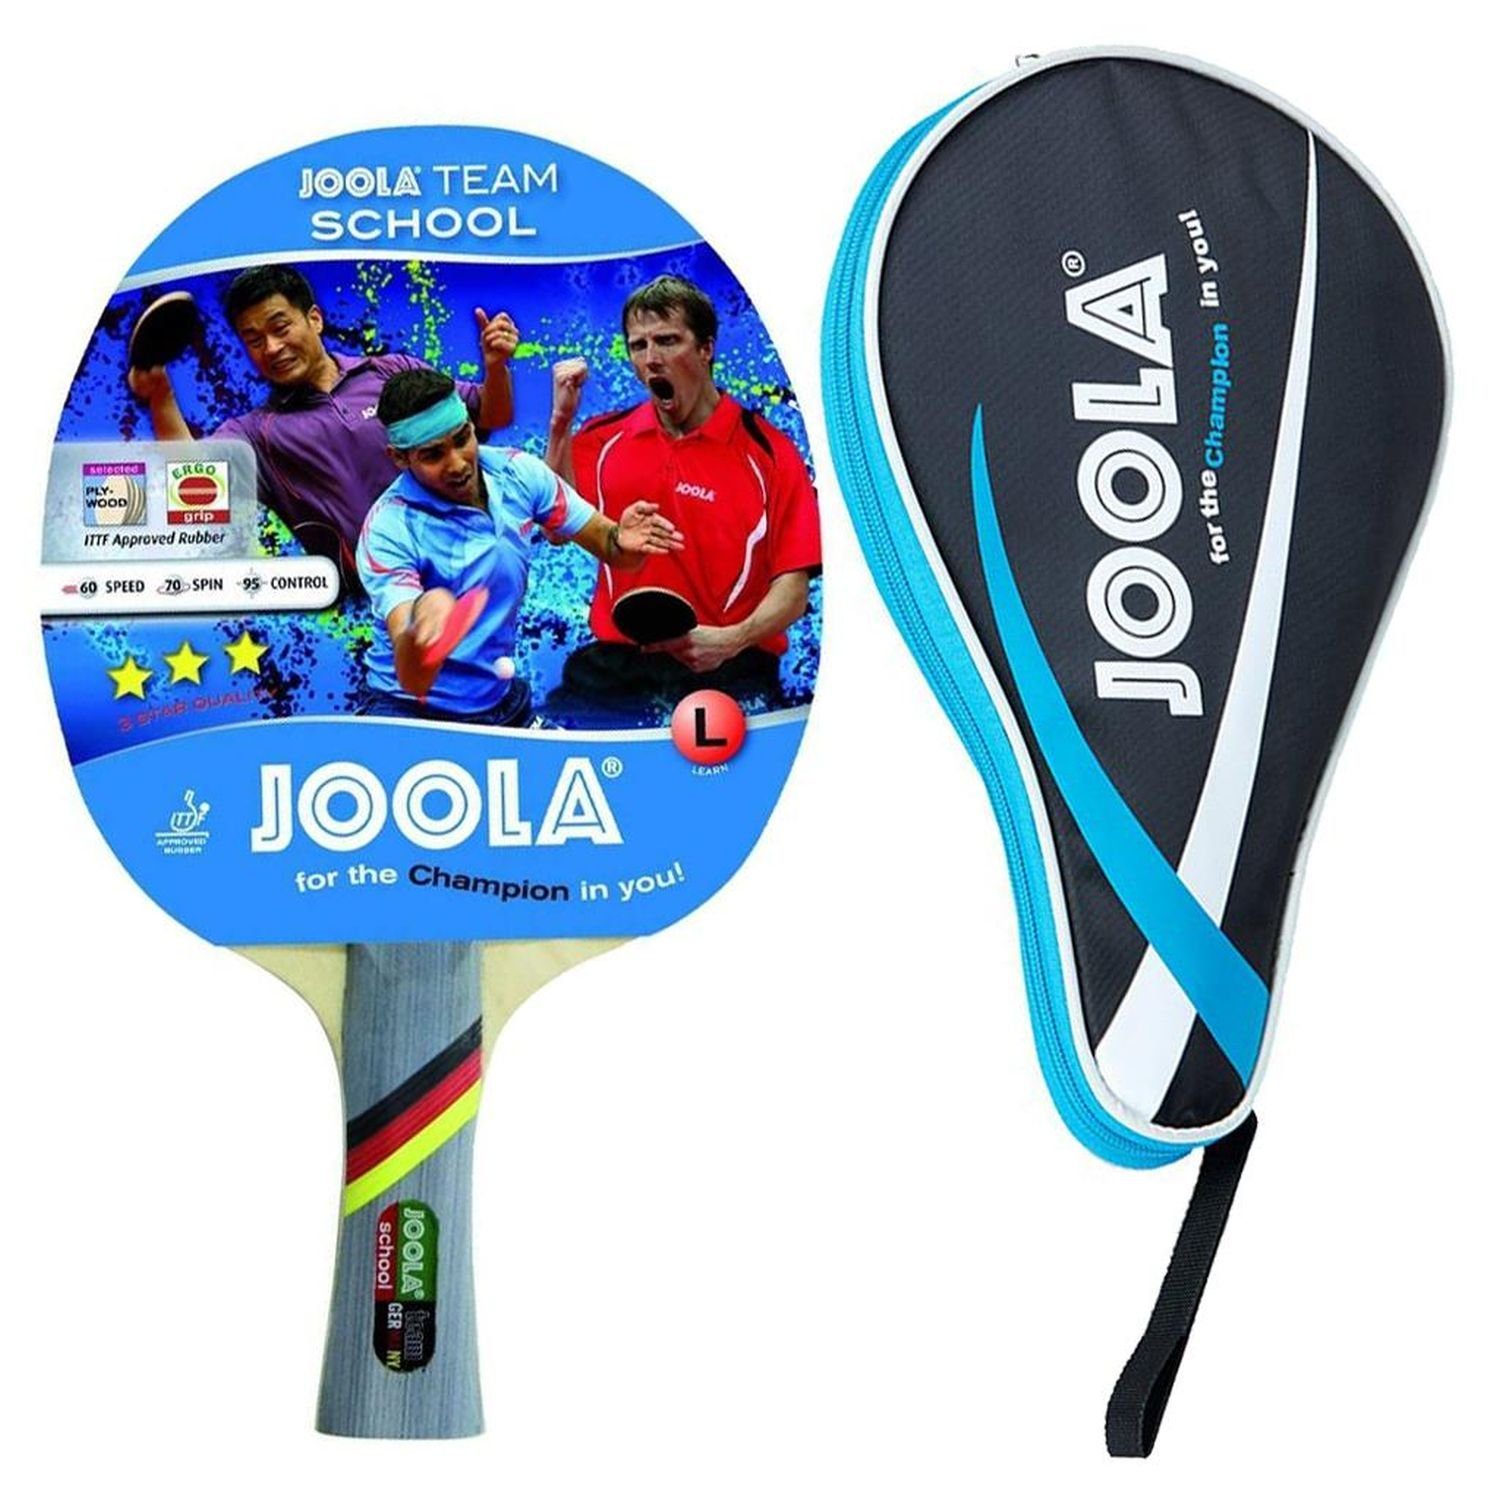 Joola Tischtennisschläger Team School + Pocket blau, Tischtennis Schläger Set Tischtennisset Table Tennis Bat Racket